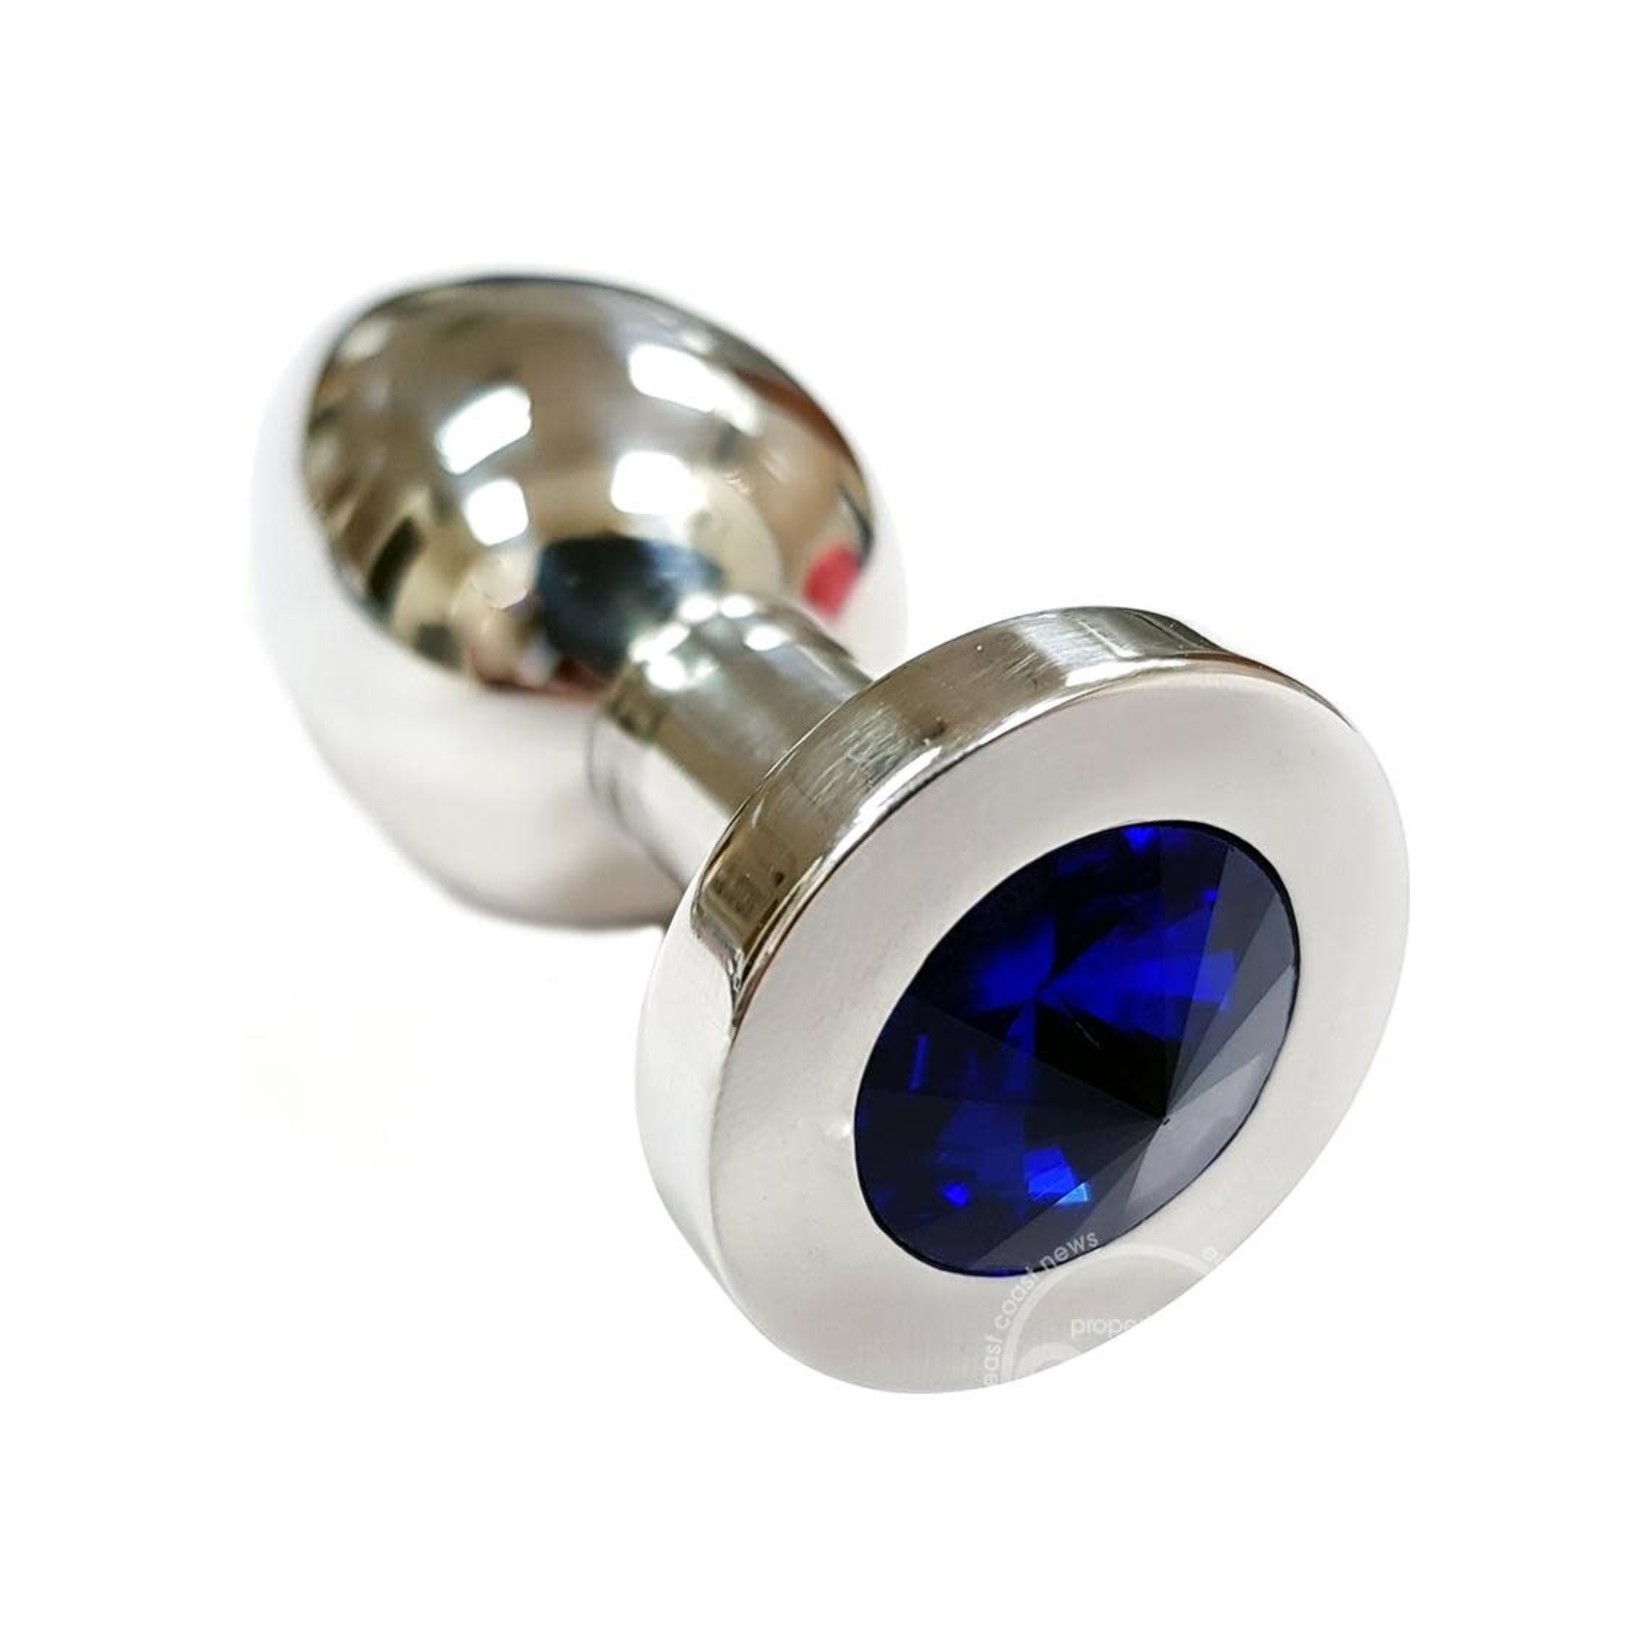 Rouge Smooth Stainless Steel Anal Plug - Medium - Blue Jewel